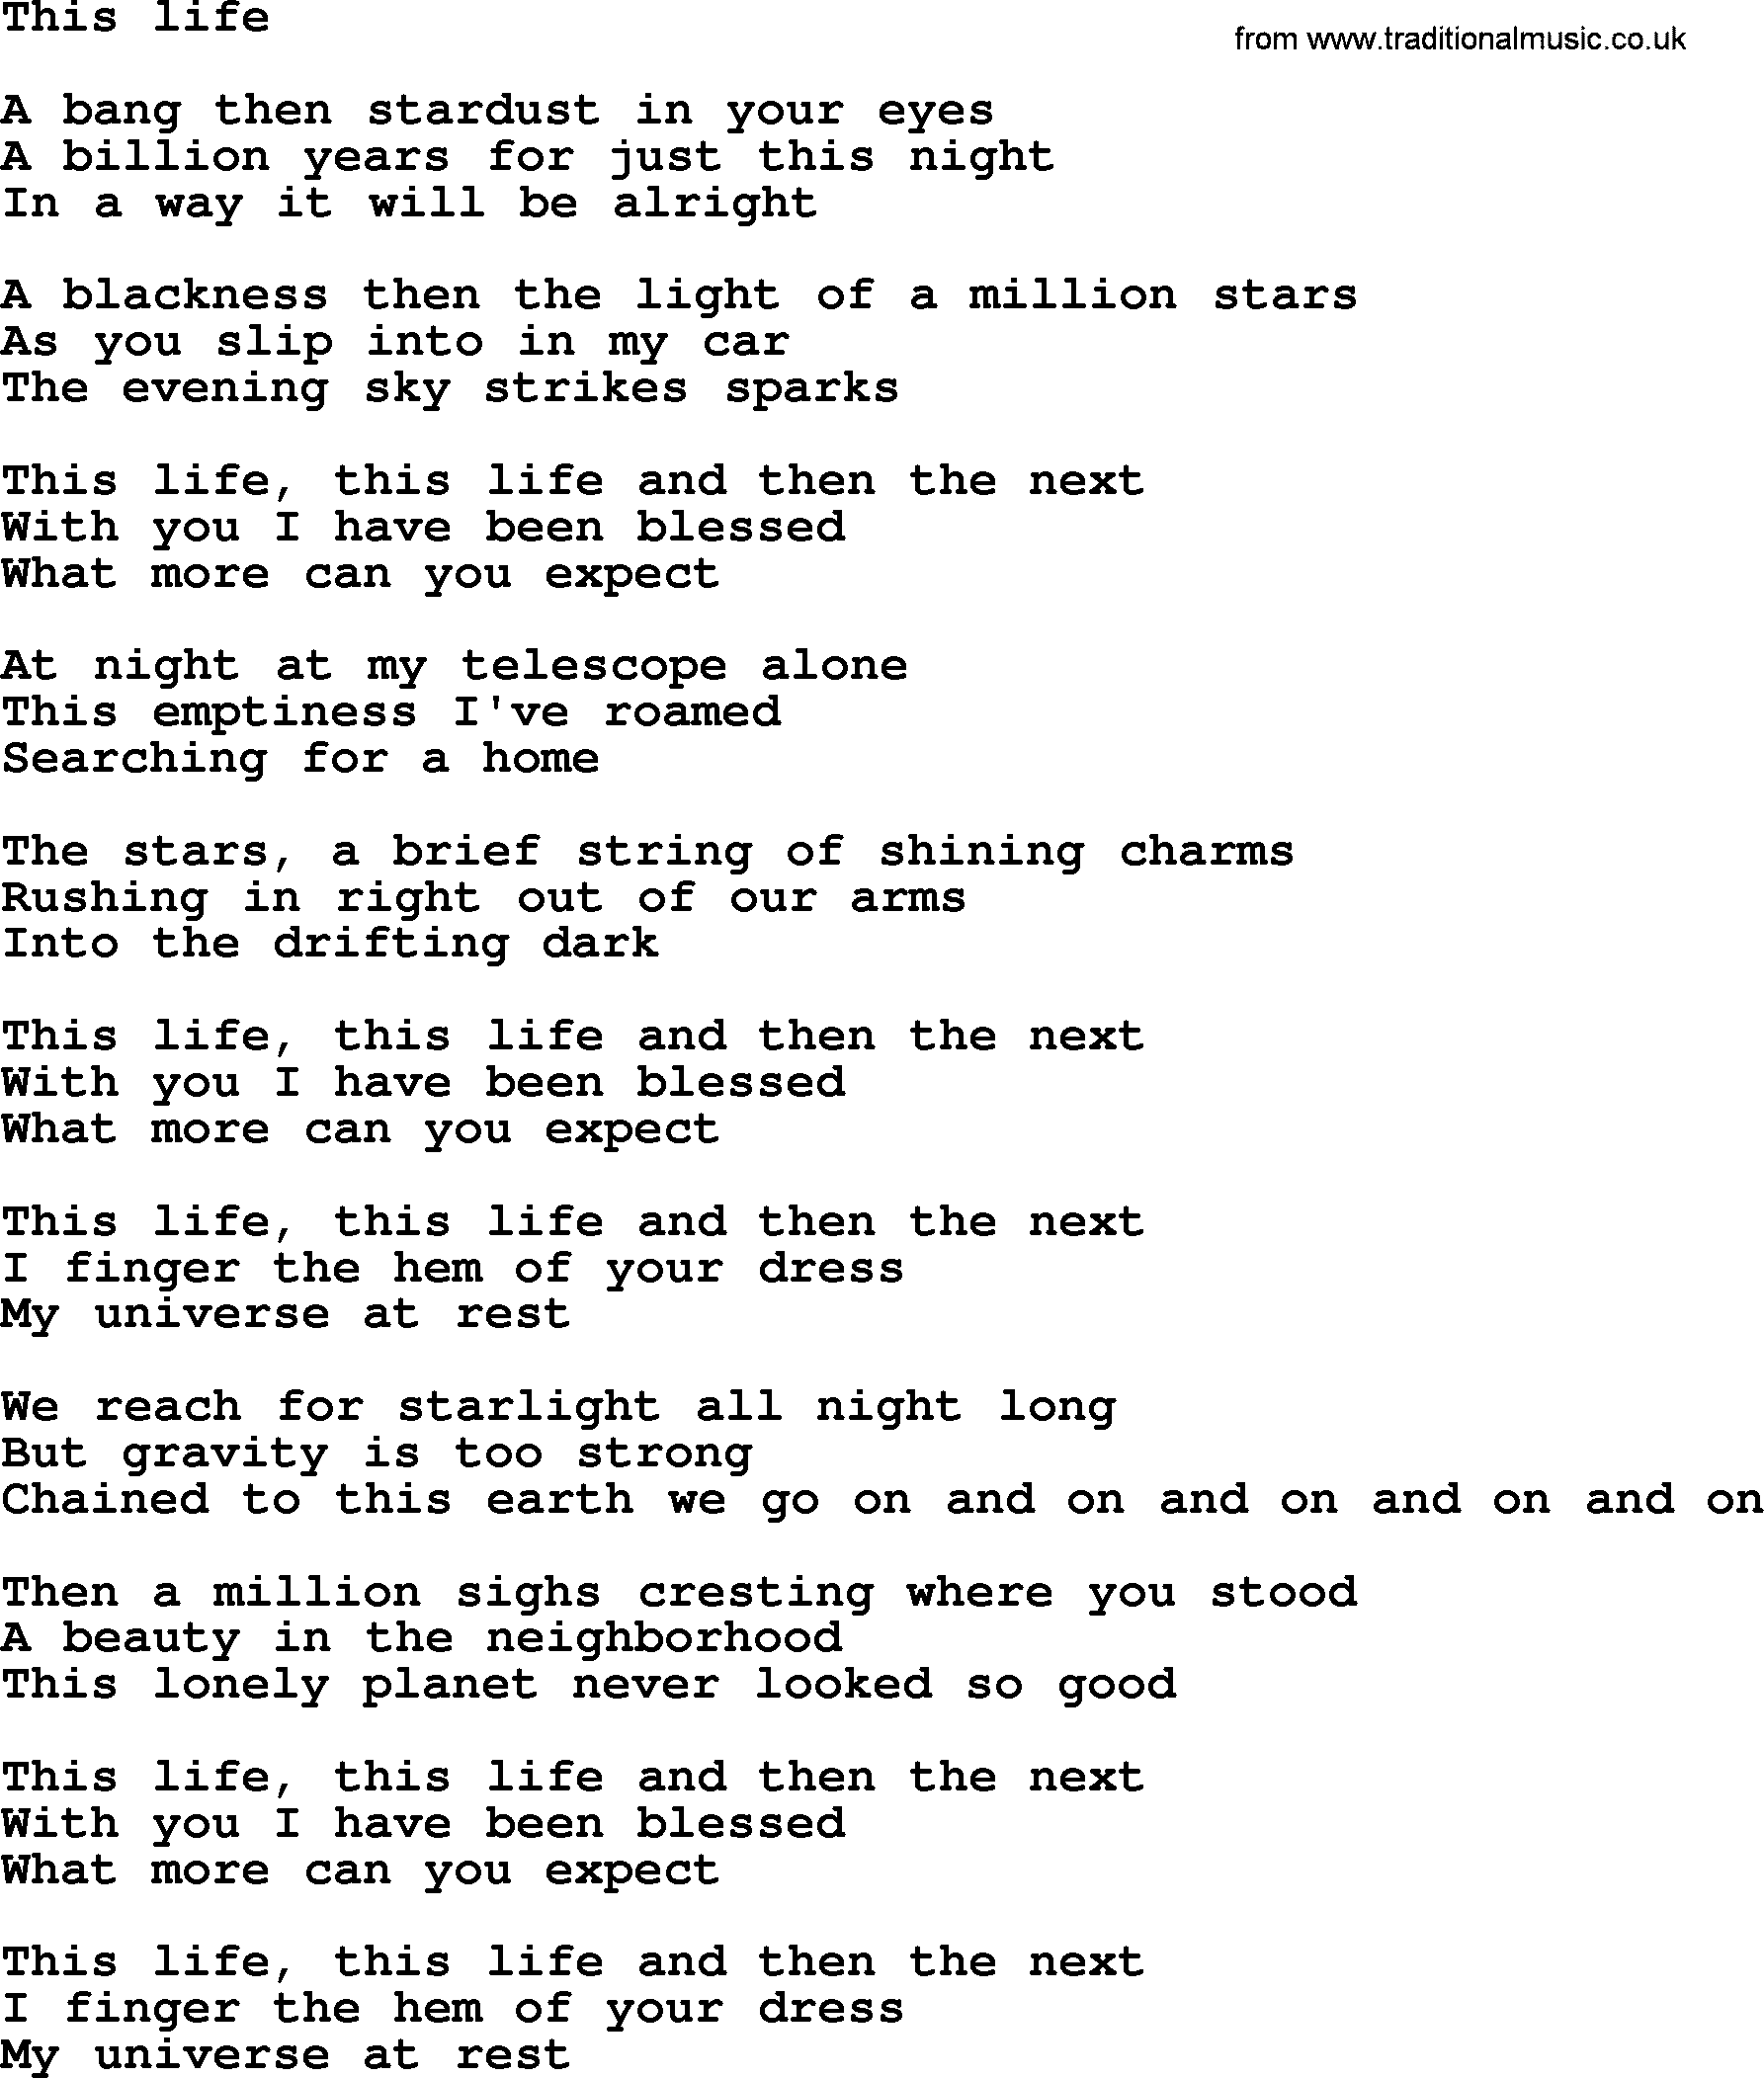 Bruce Springsteen song: This Life lyrics